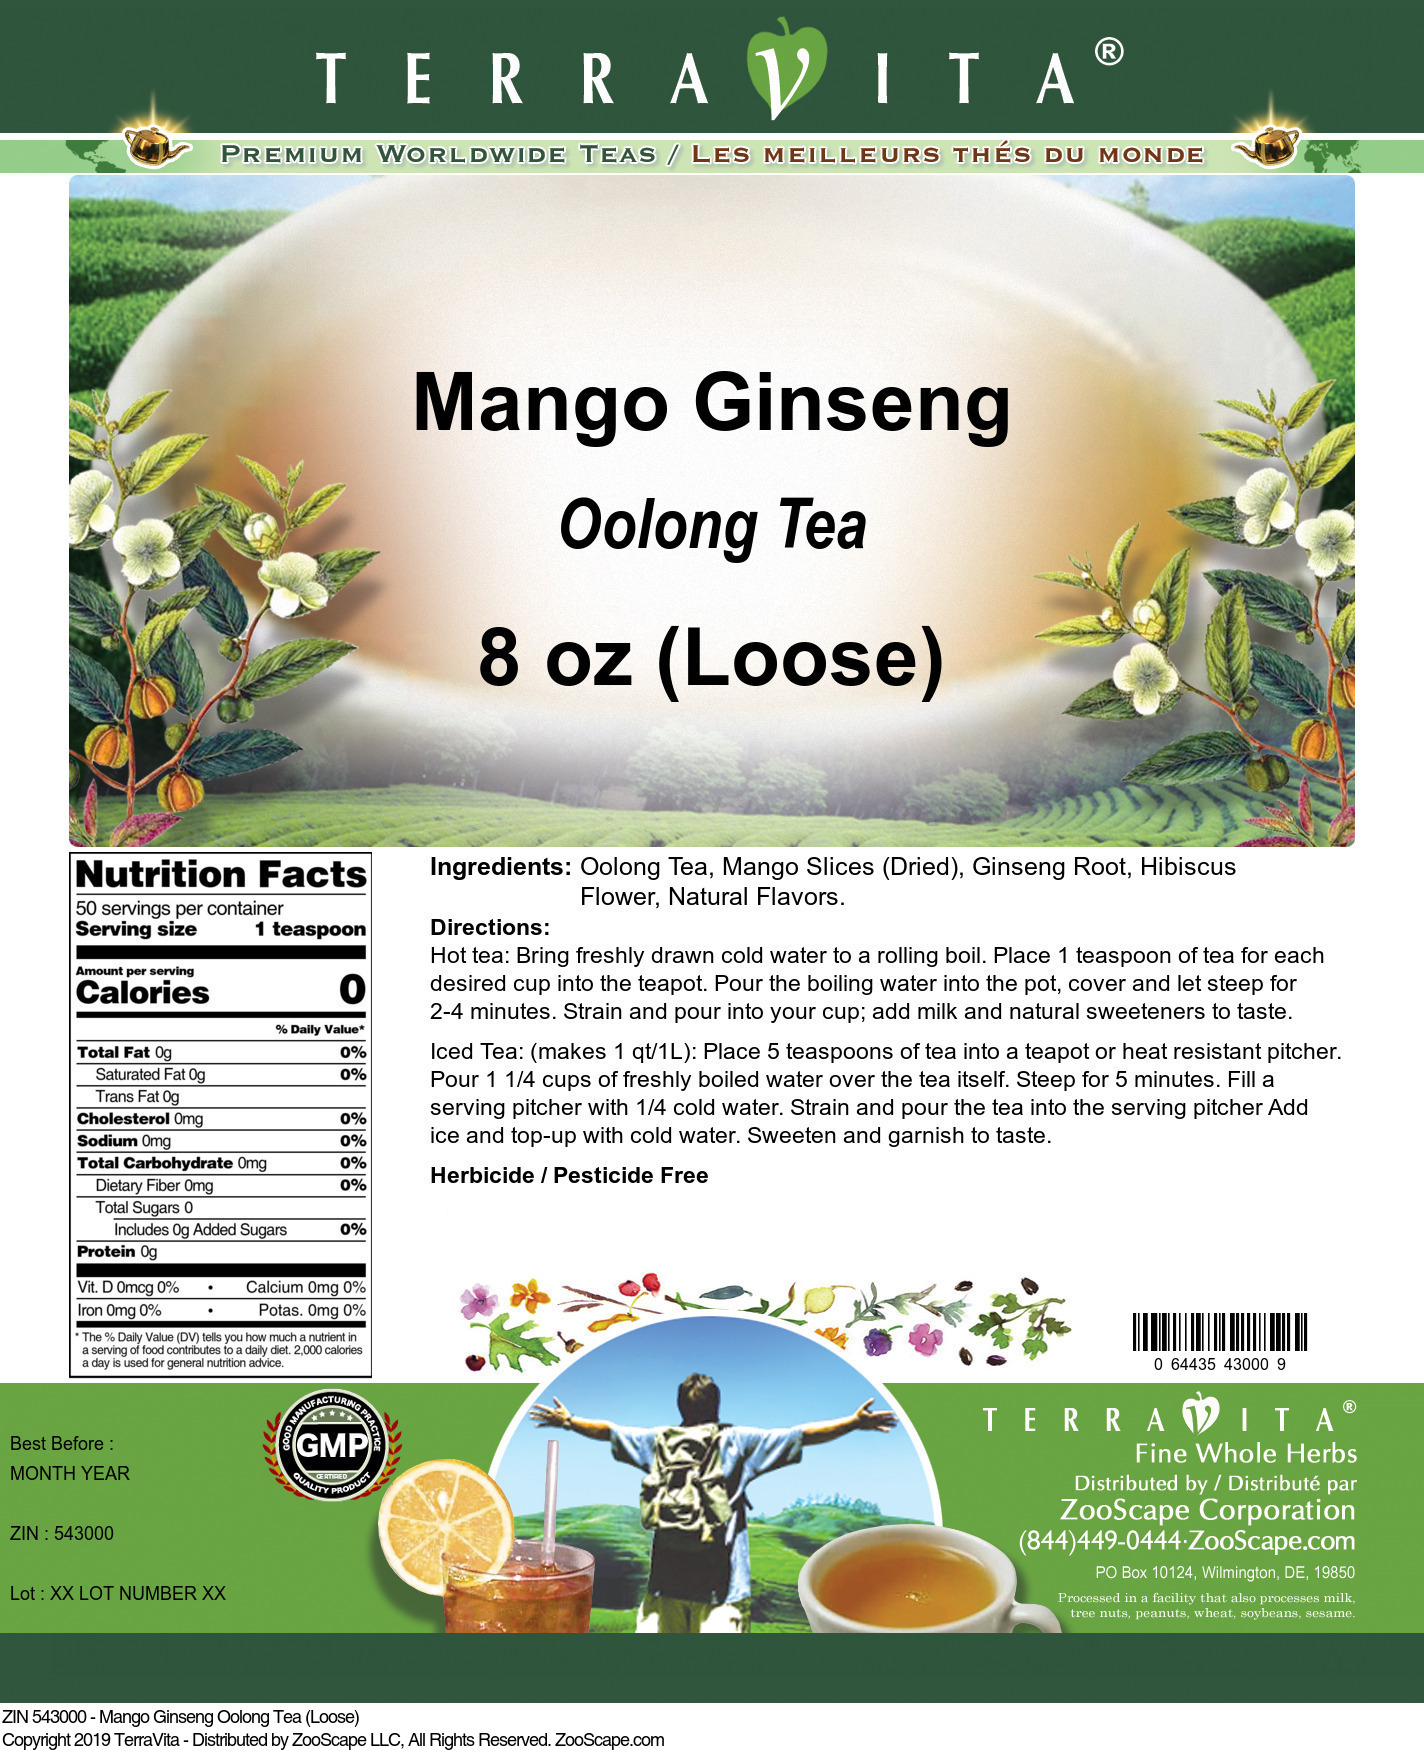 Mango Ginseng Oolong Tea (Loose) - Label